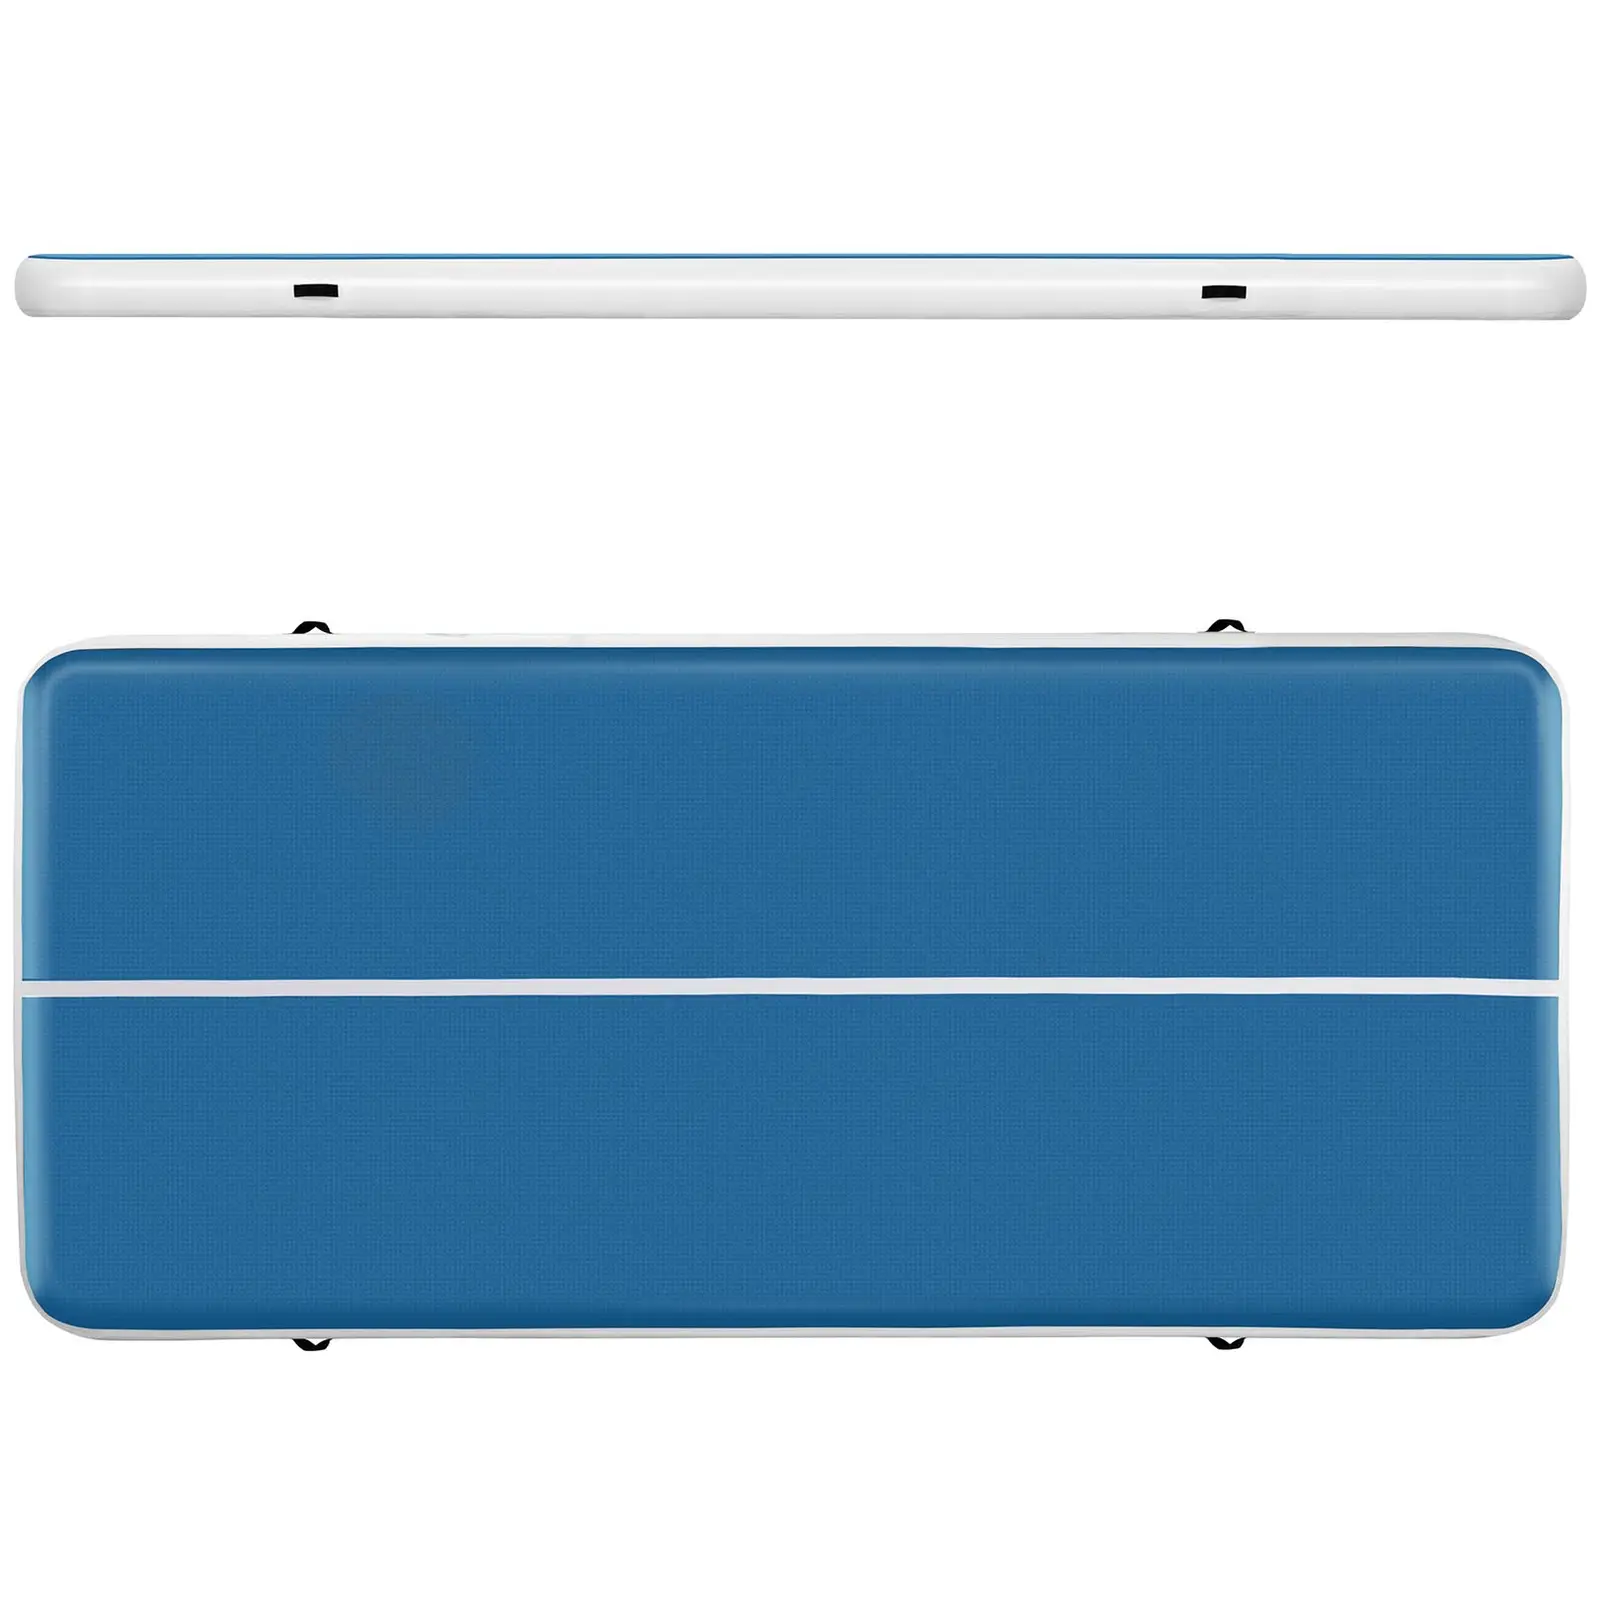 Aufblasbare Turnmatte - 300 x 200 x 20 cm - 300 kg - blau/weiß